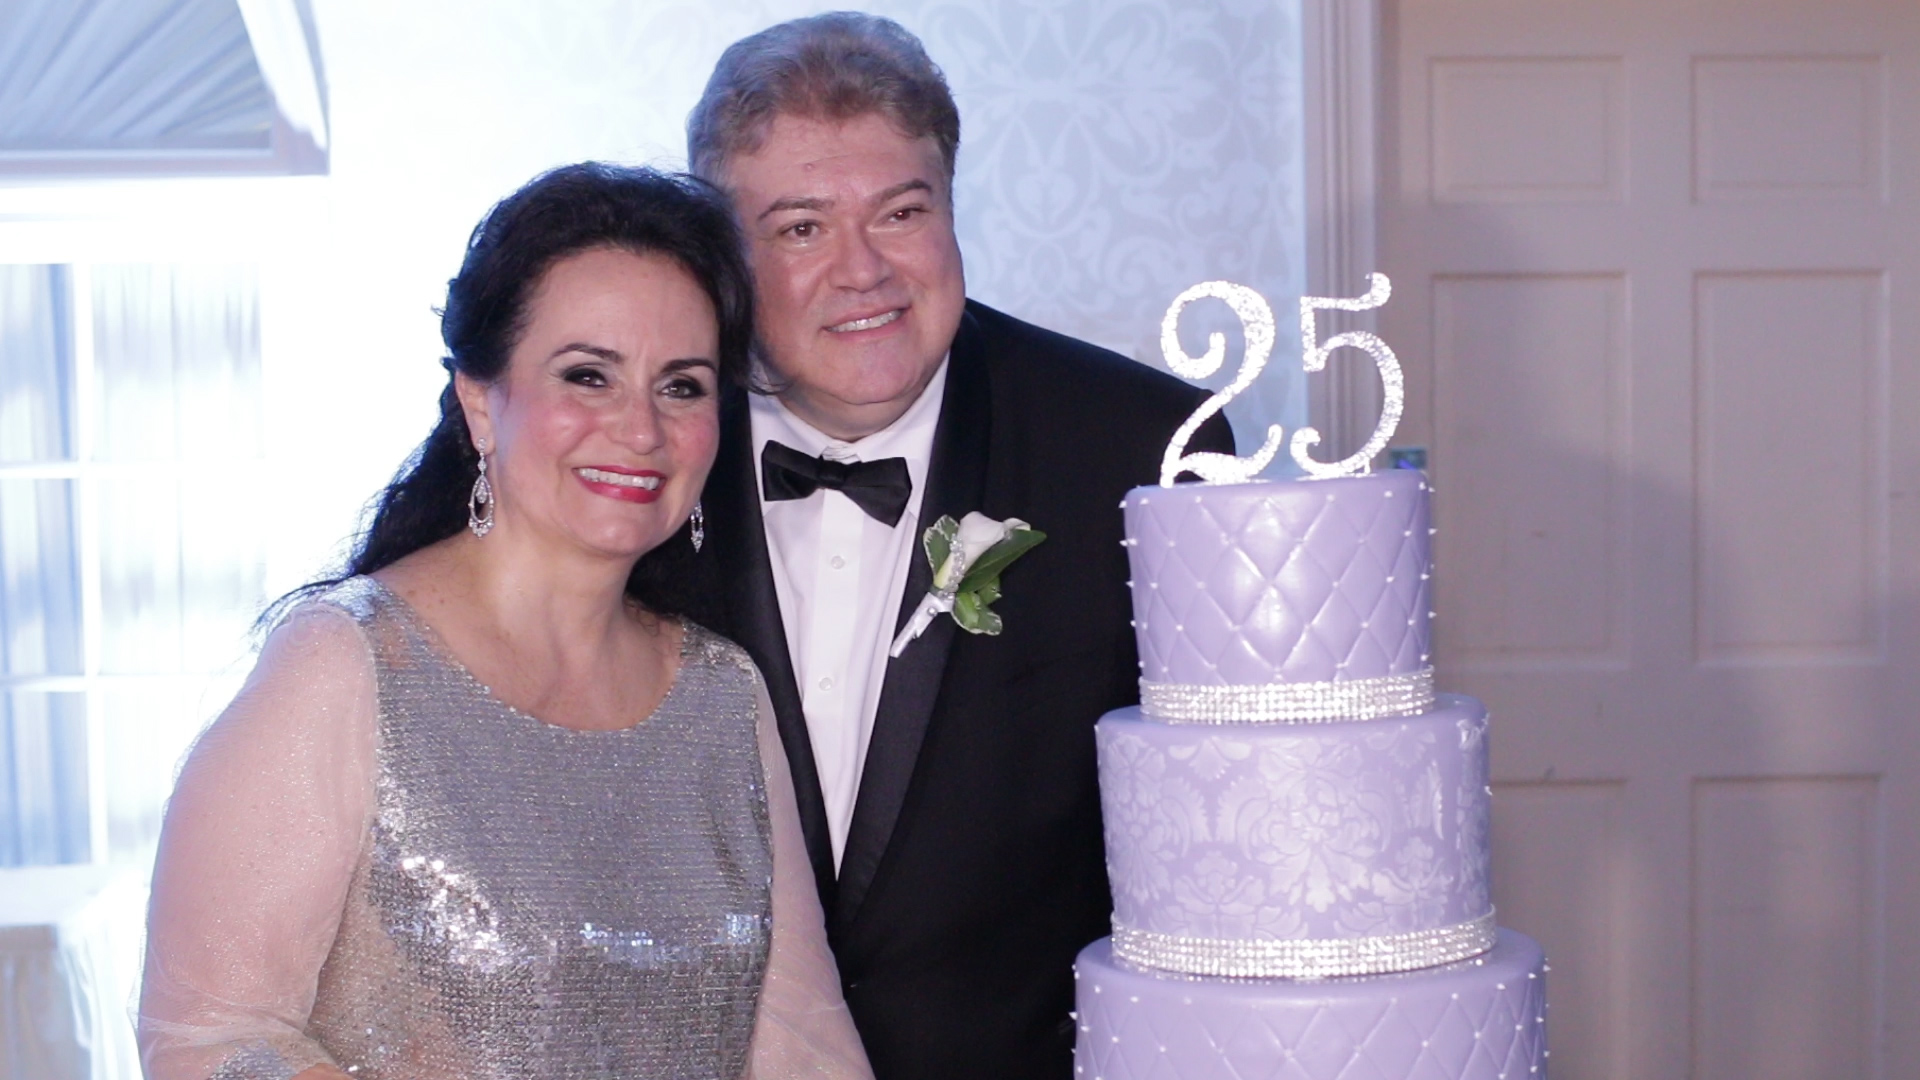 Olga & Raymond 25th Wedding Anniversary